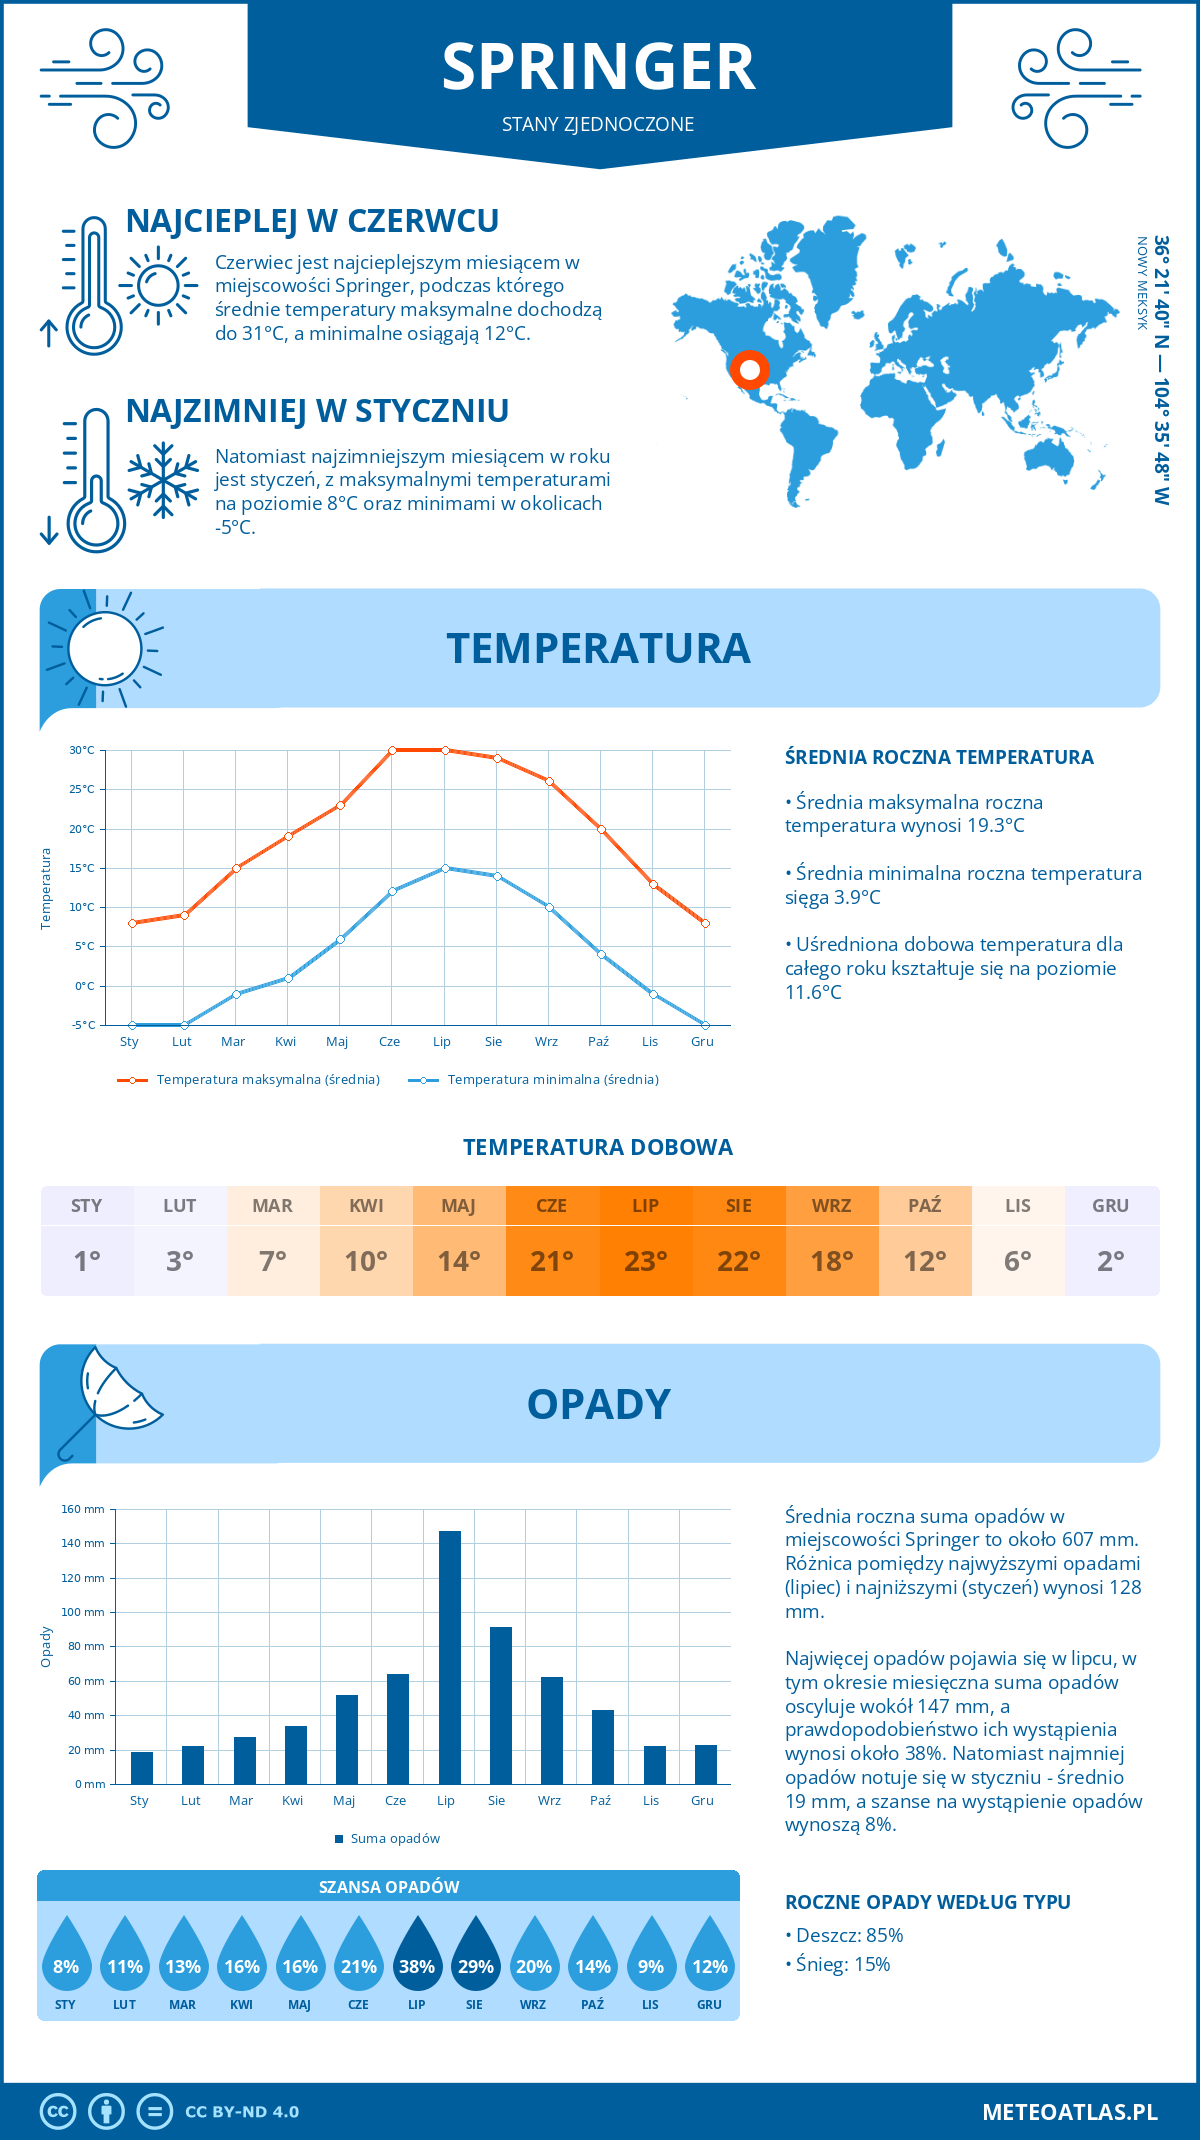 Pogoda Springer (Stany Zjednoczone). Temperatura oraz opady.